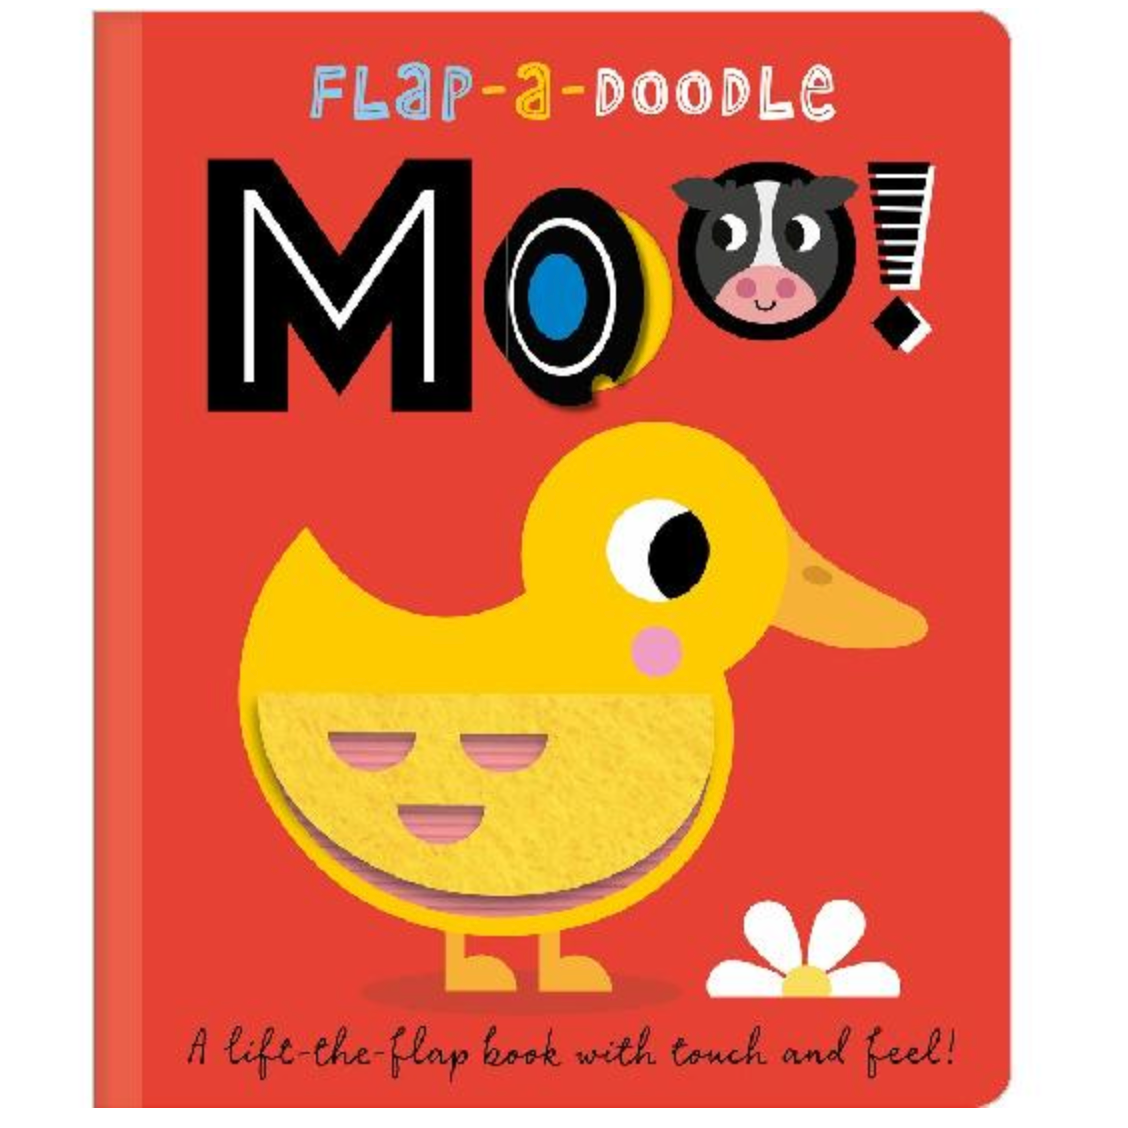 Flap-a-Doodle Moo!